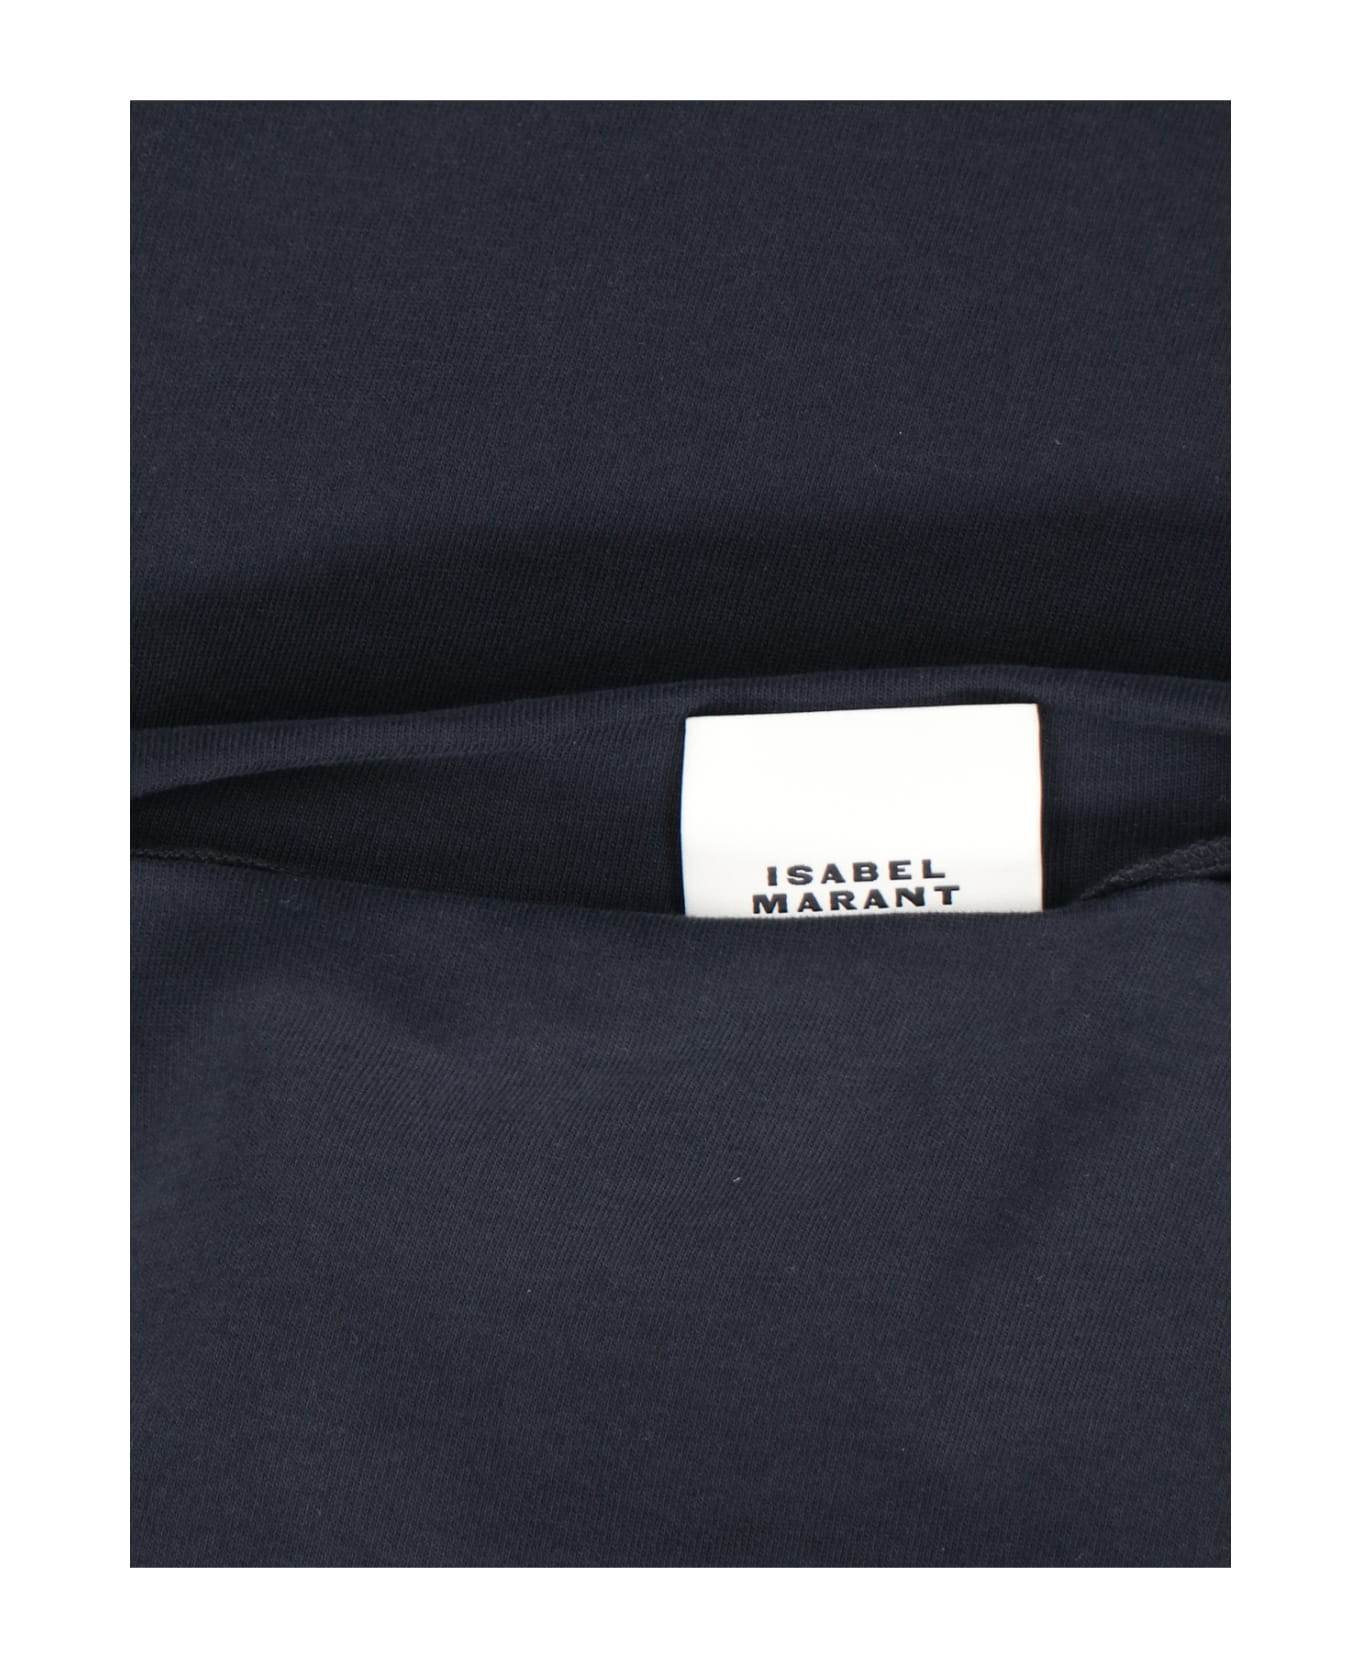 Isabel Marant 'sebani' T-shirt - Black  